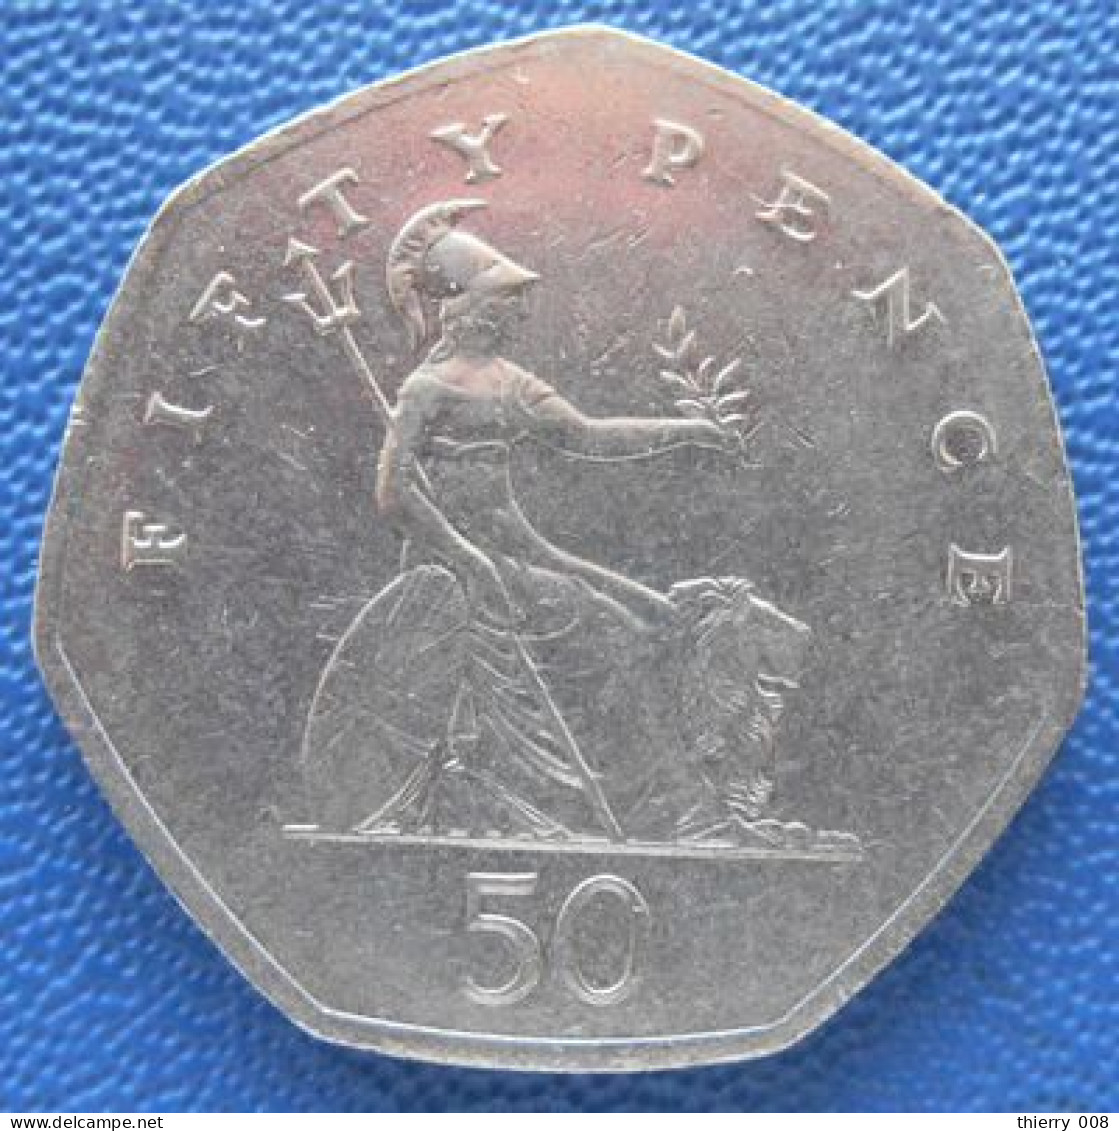 Pièce Angleterre Grande Bretagne 50 Fifty Pence   Elisabeth II D G REG F D 2004 - 50 Pence